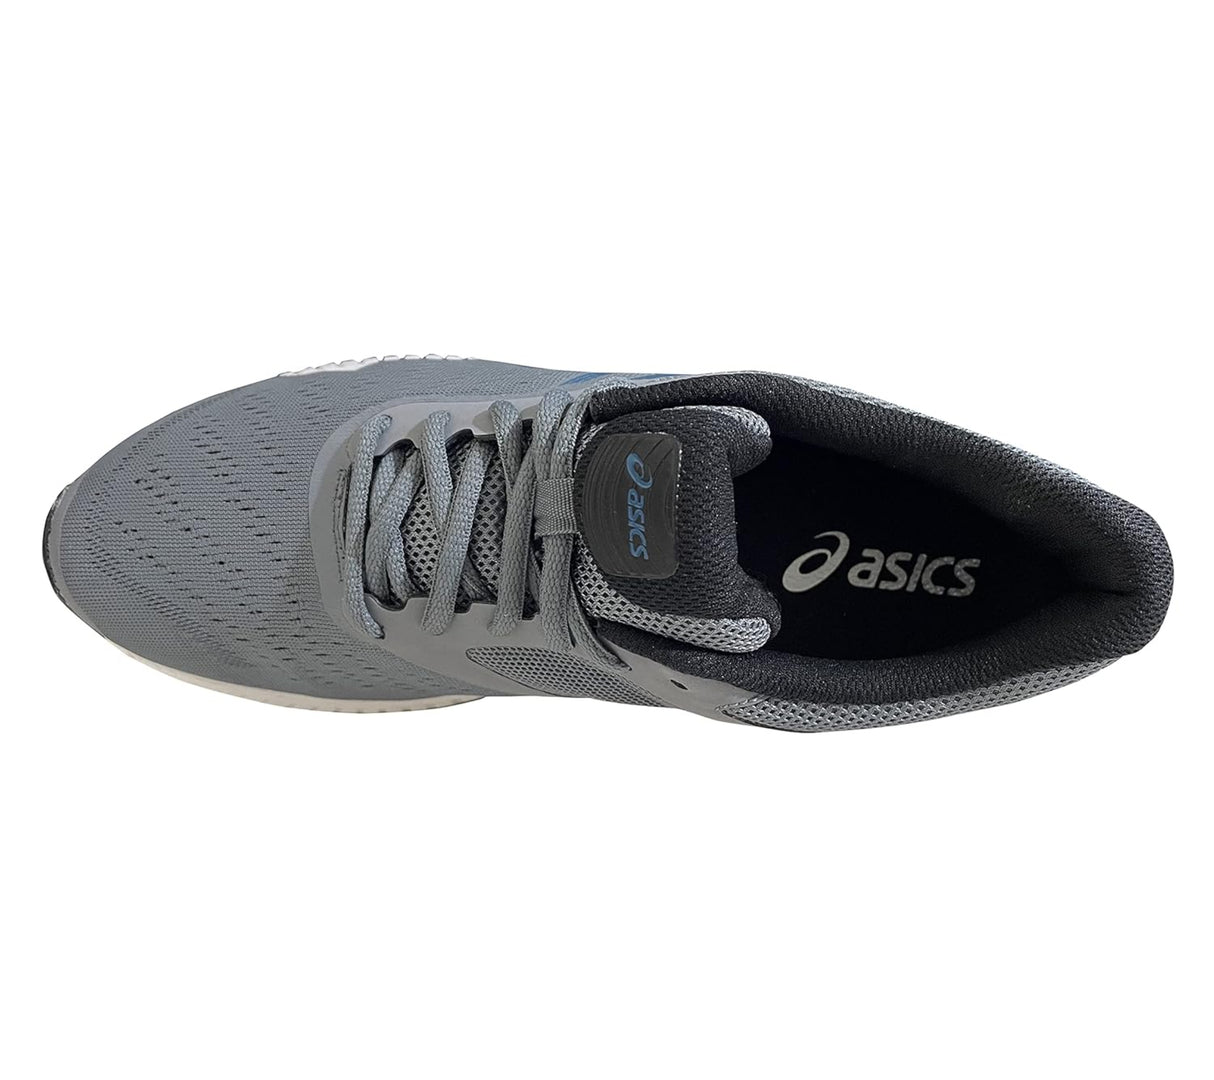 Asics FLEXC Sports Running Shoes Metropolis/Deep Sea Teal 1201A275